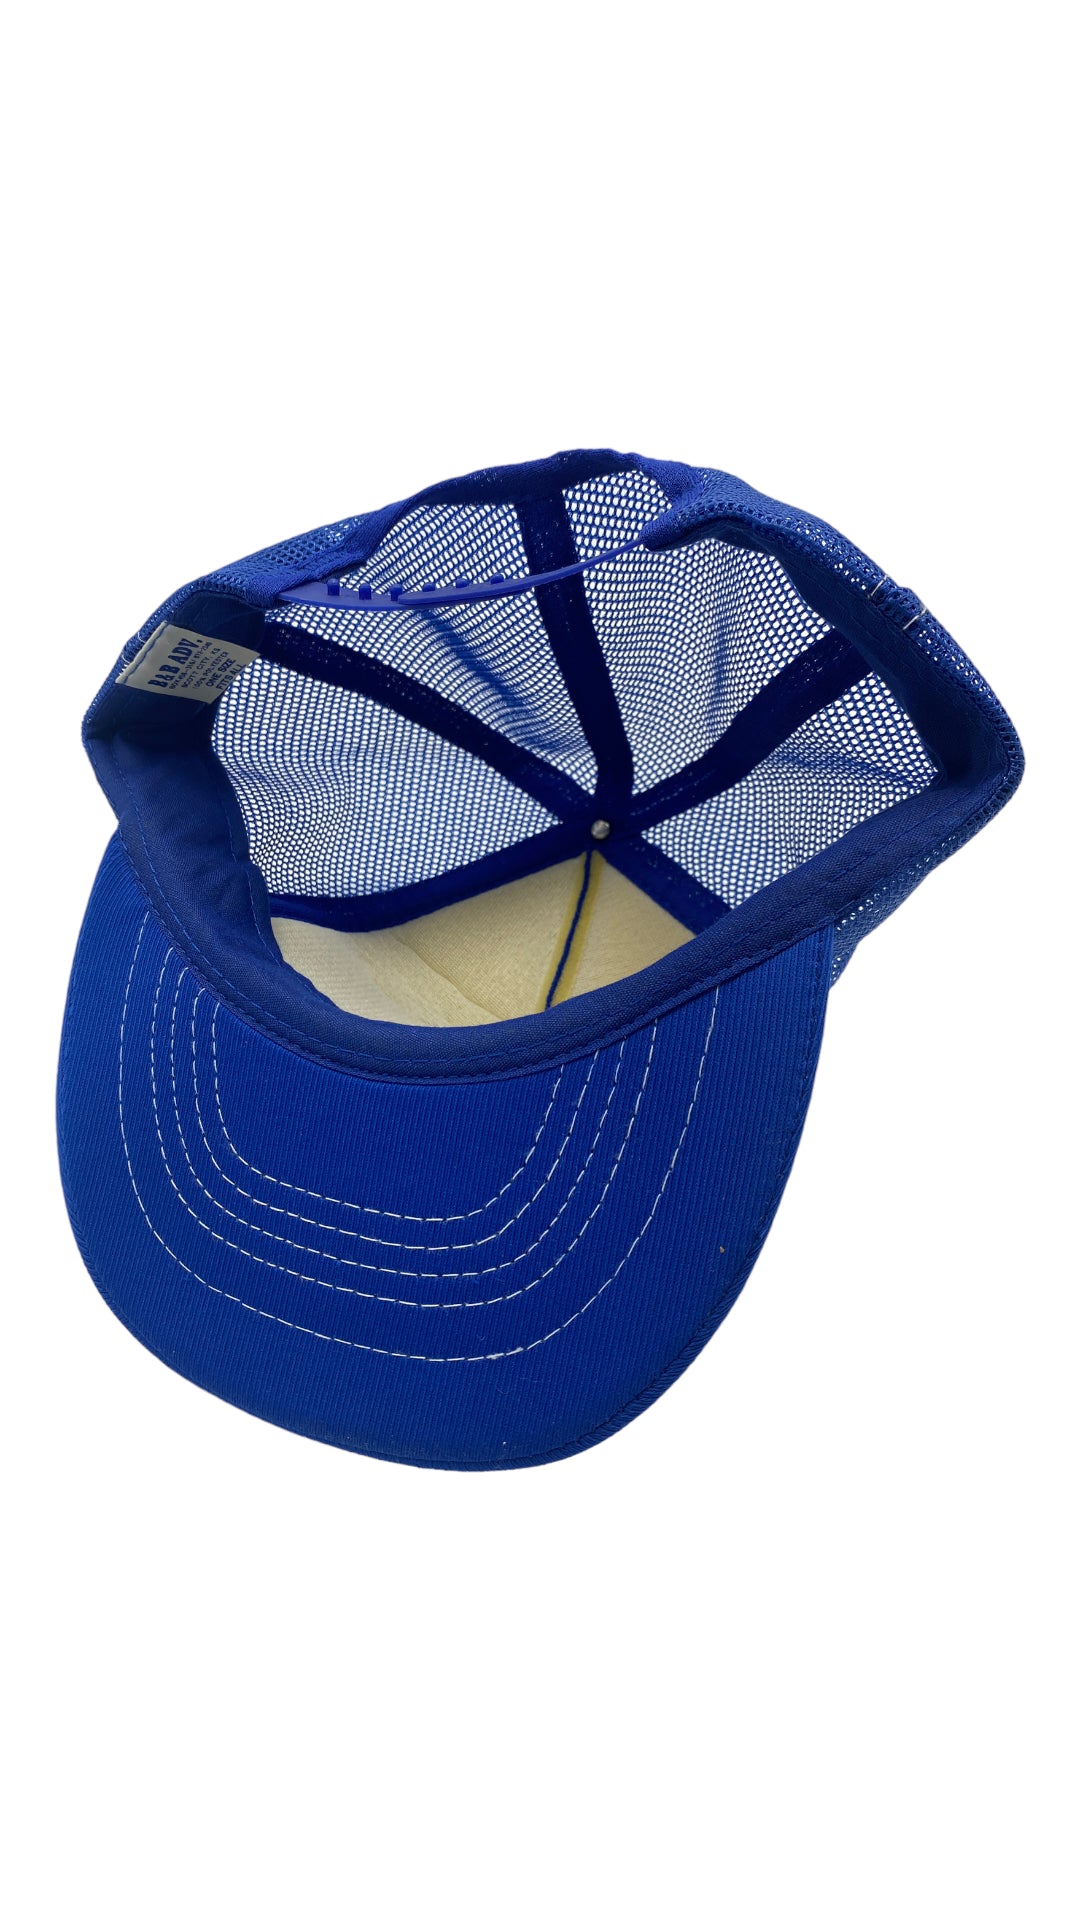 VTG Blue Clay’s Snapback Hat